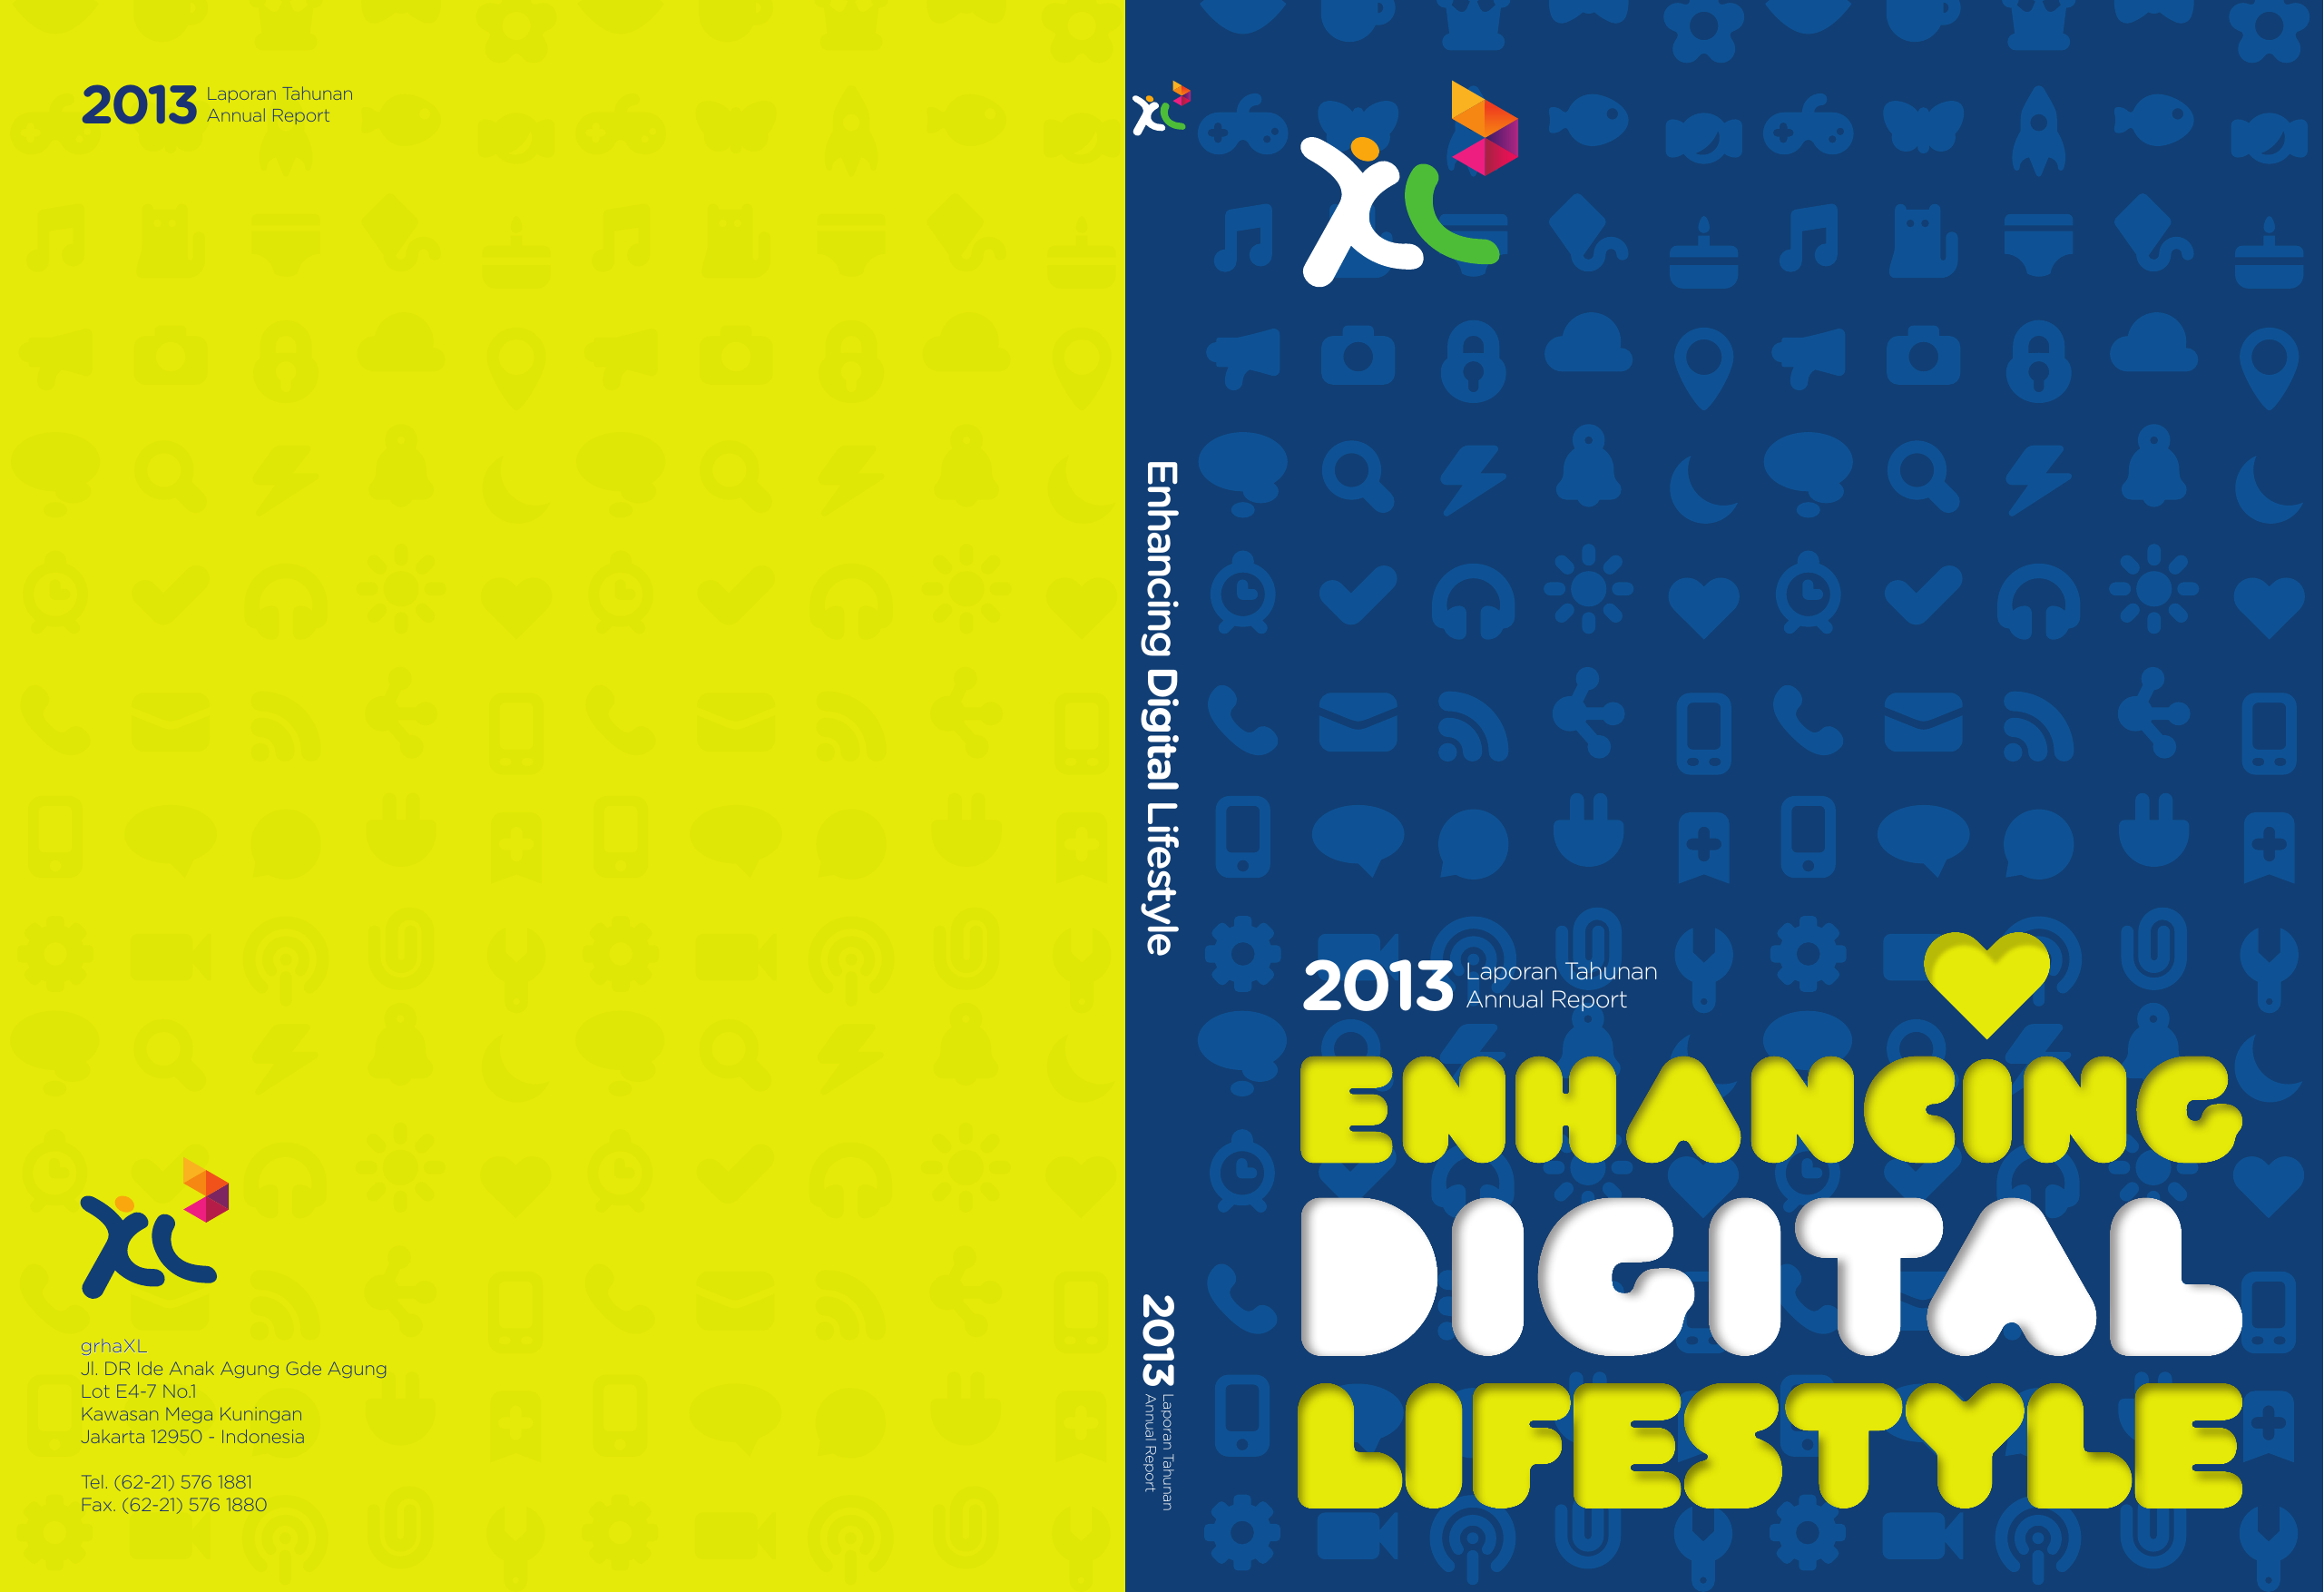 Report Enhancing Digital Lifestyle Laporan Tahunan Annual Report Tel 62 21 576 1881 Fax 62 21 576 1880 2013 grhaXL Jl DR Ide Anak Agung Gde Agung